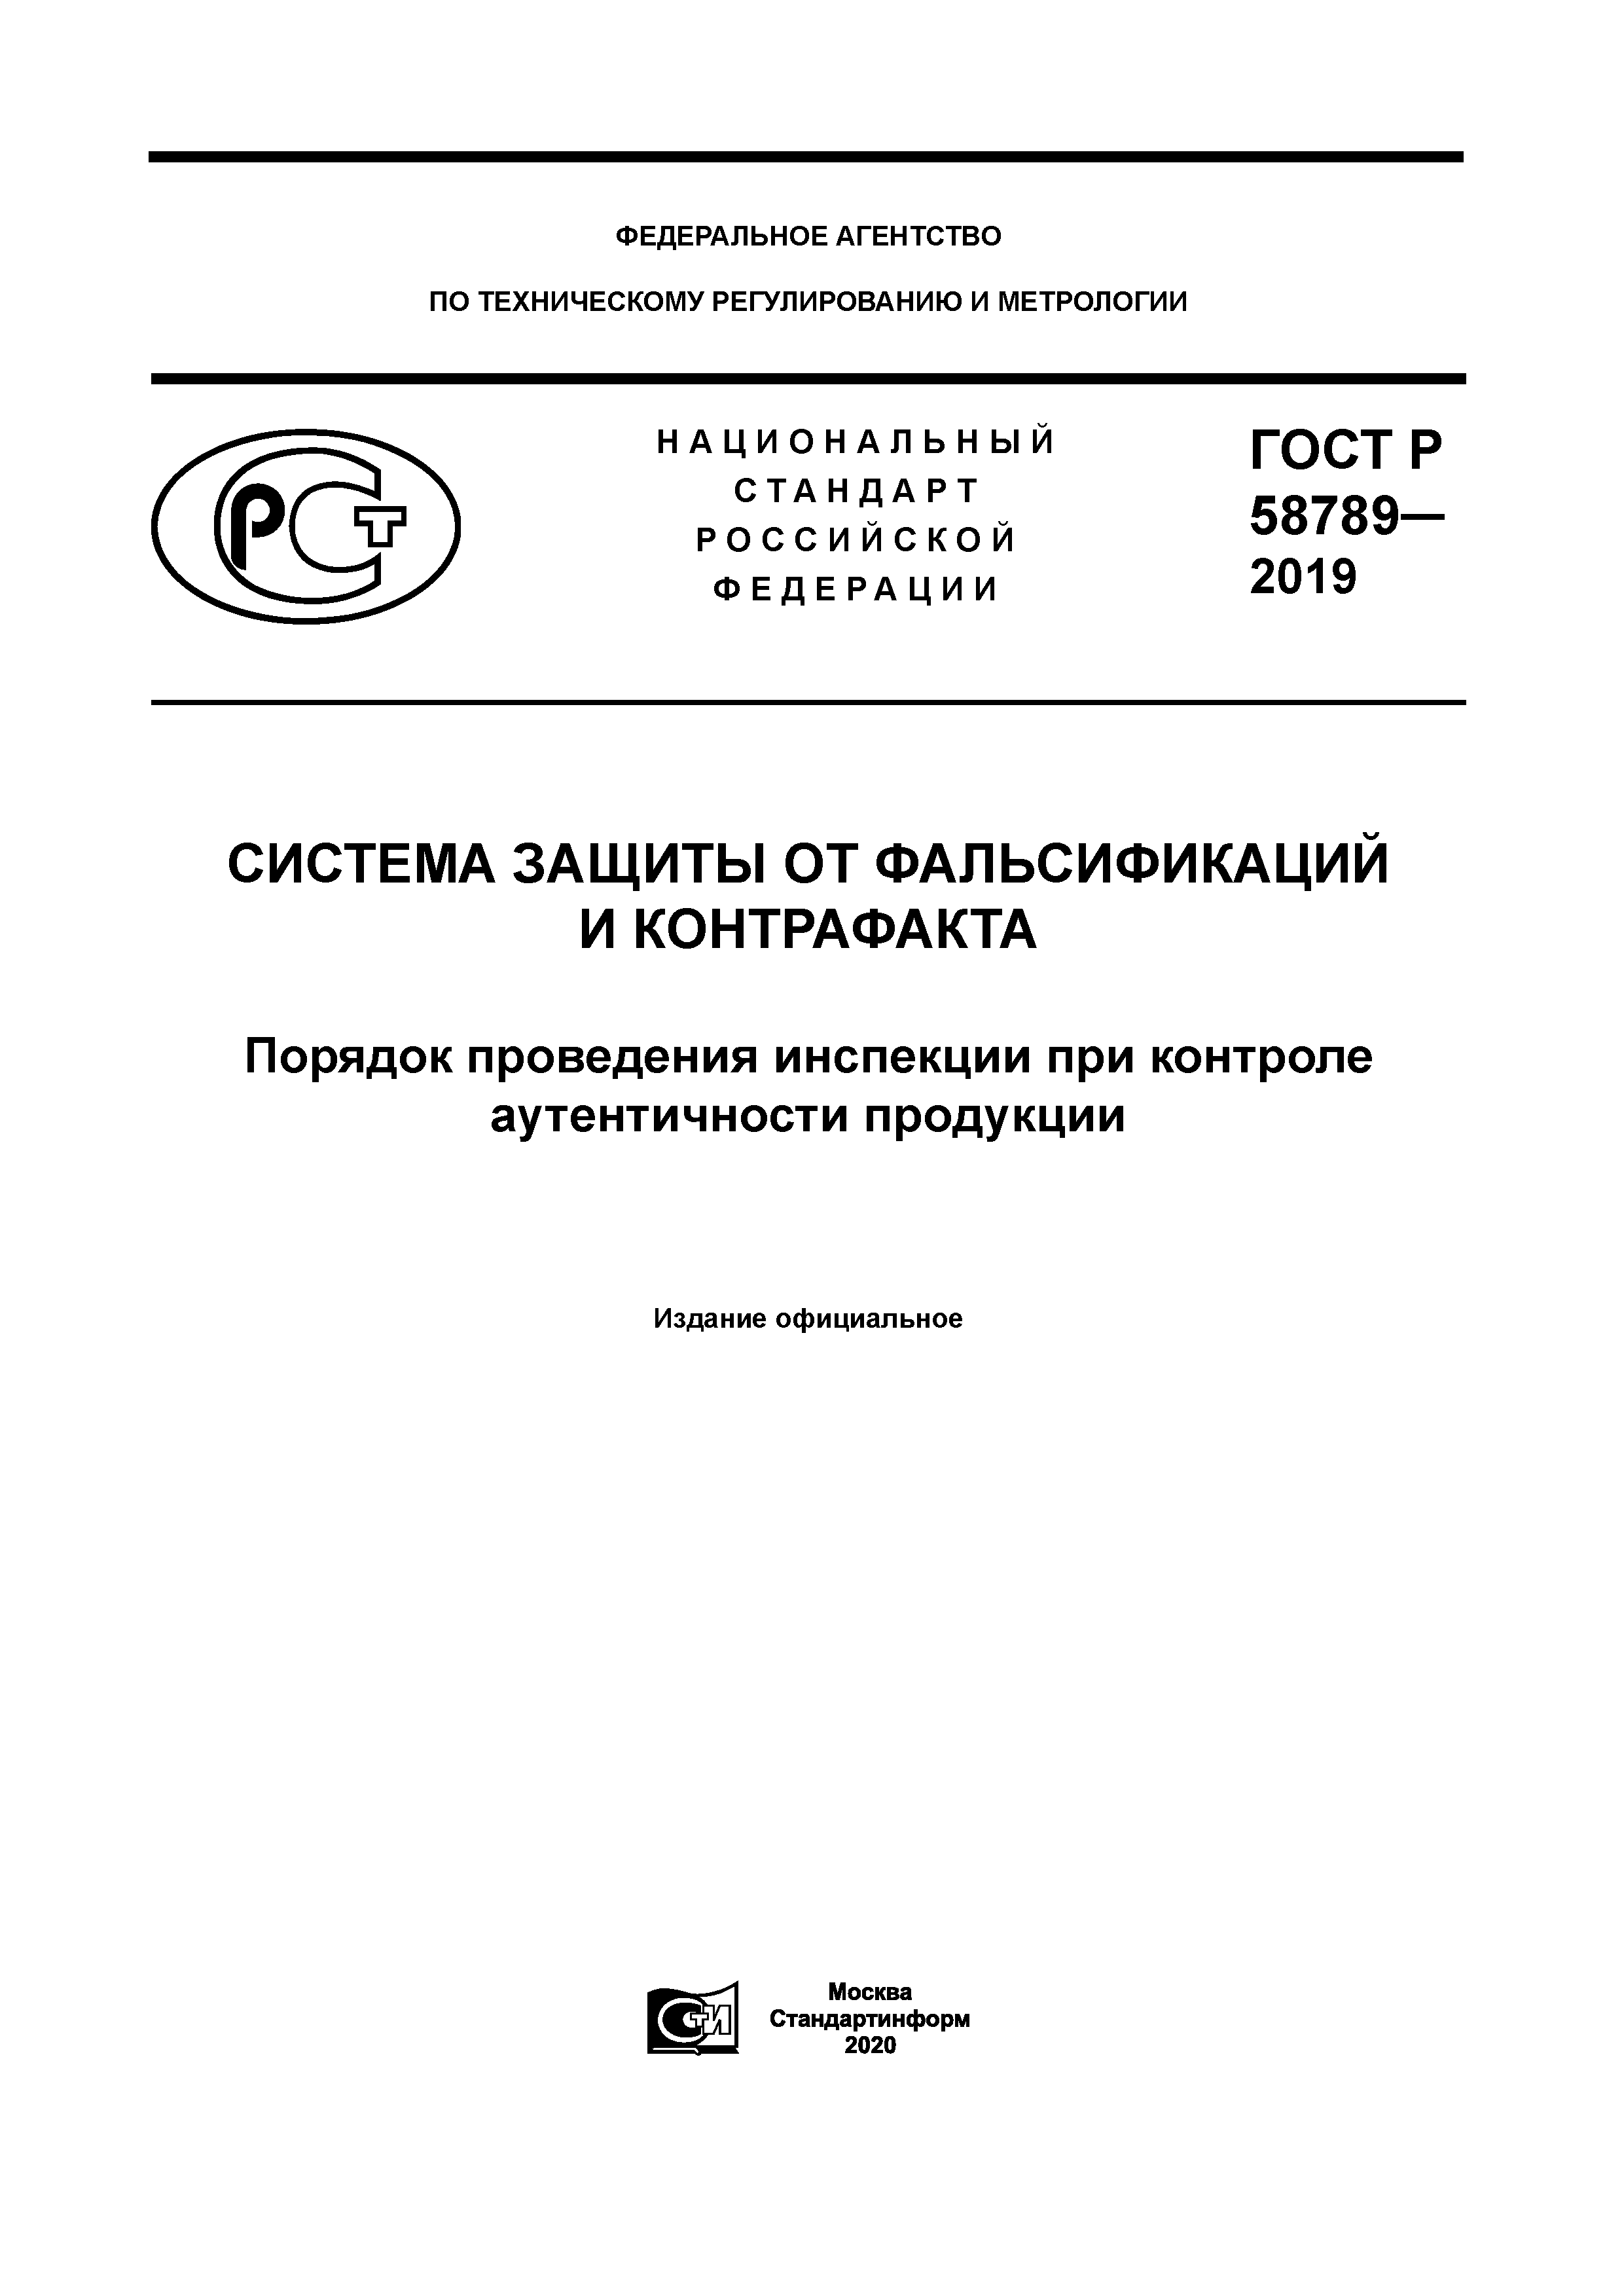 ГОСТ Р 58789-2019